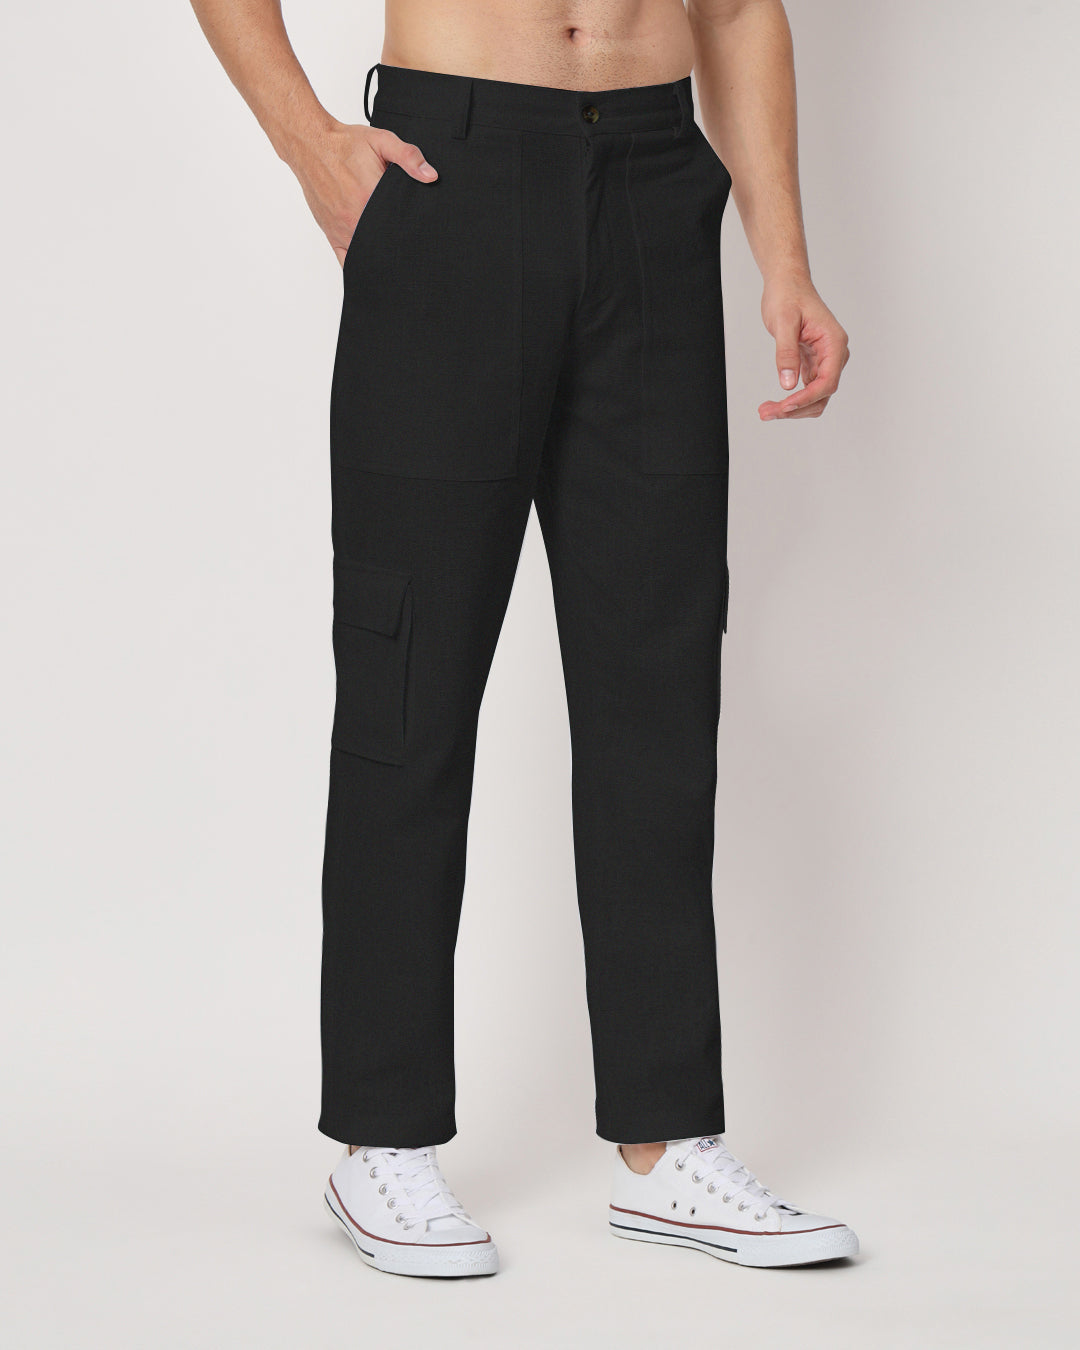 Combo: Function Flex Black & White Men's Pants- Set Of 2